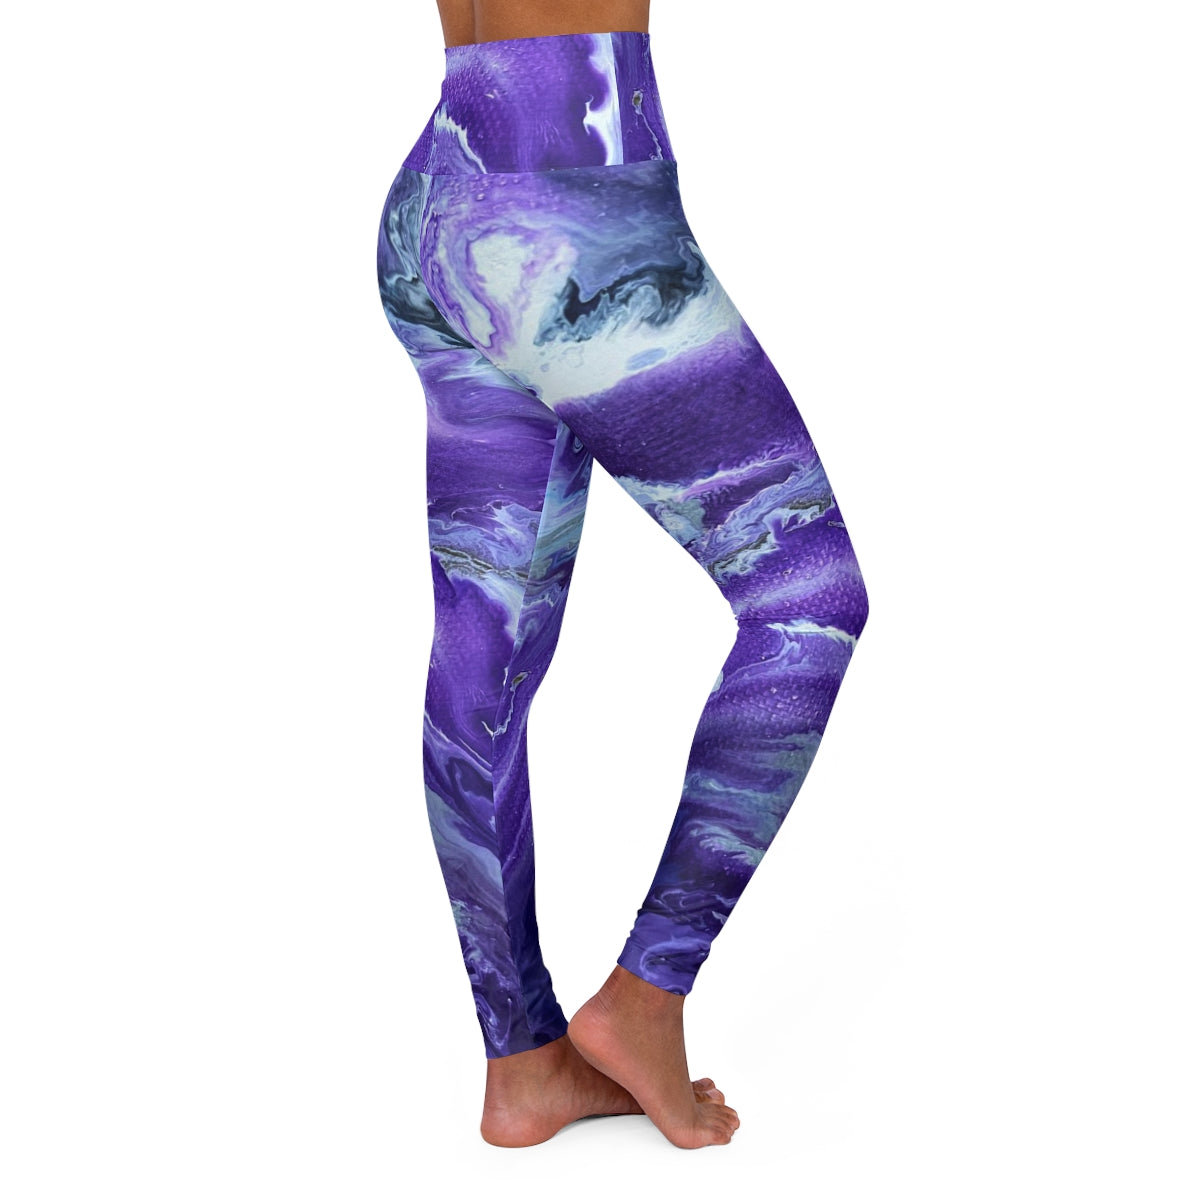 High Waisted Yoga Leggings - Ady's Purplez!